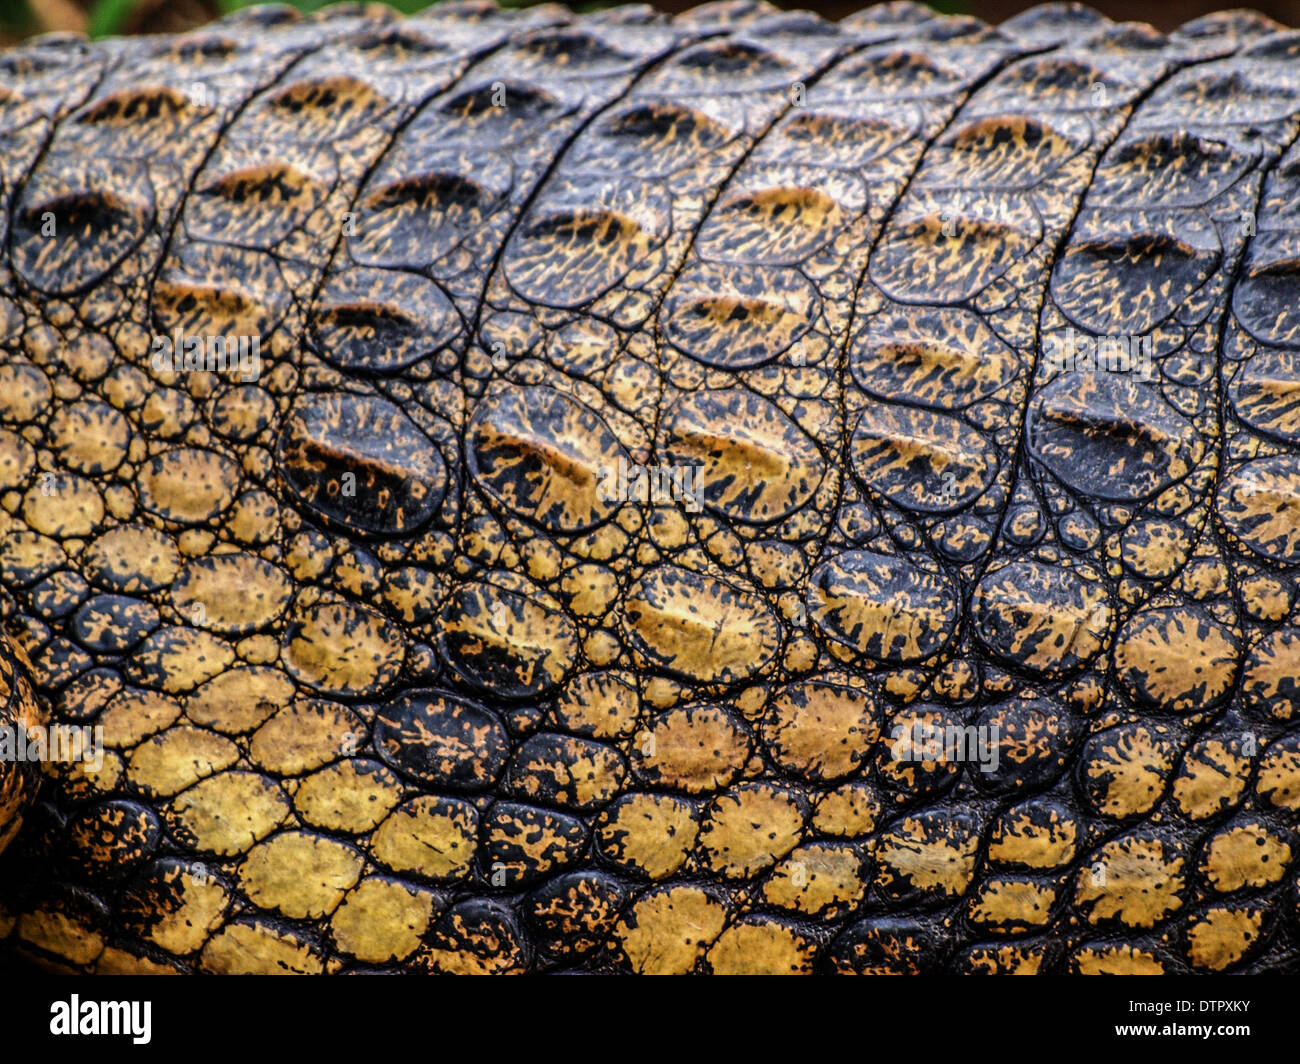 Crocodile skin detail Stock Photo